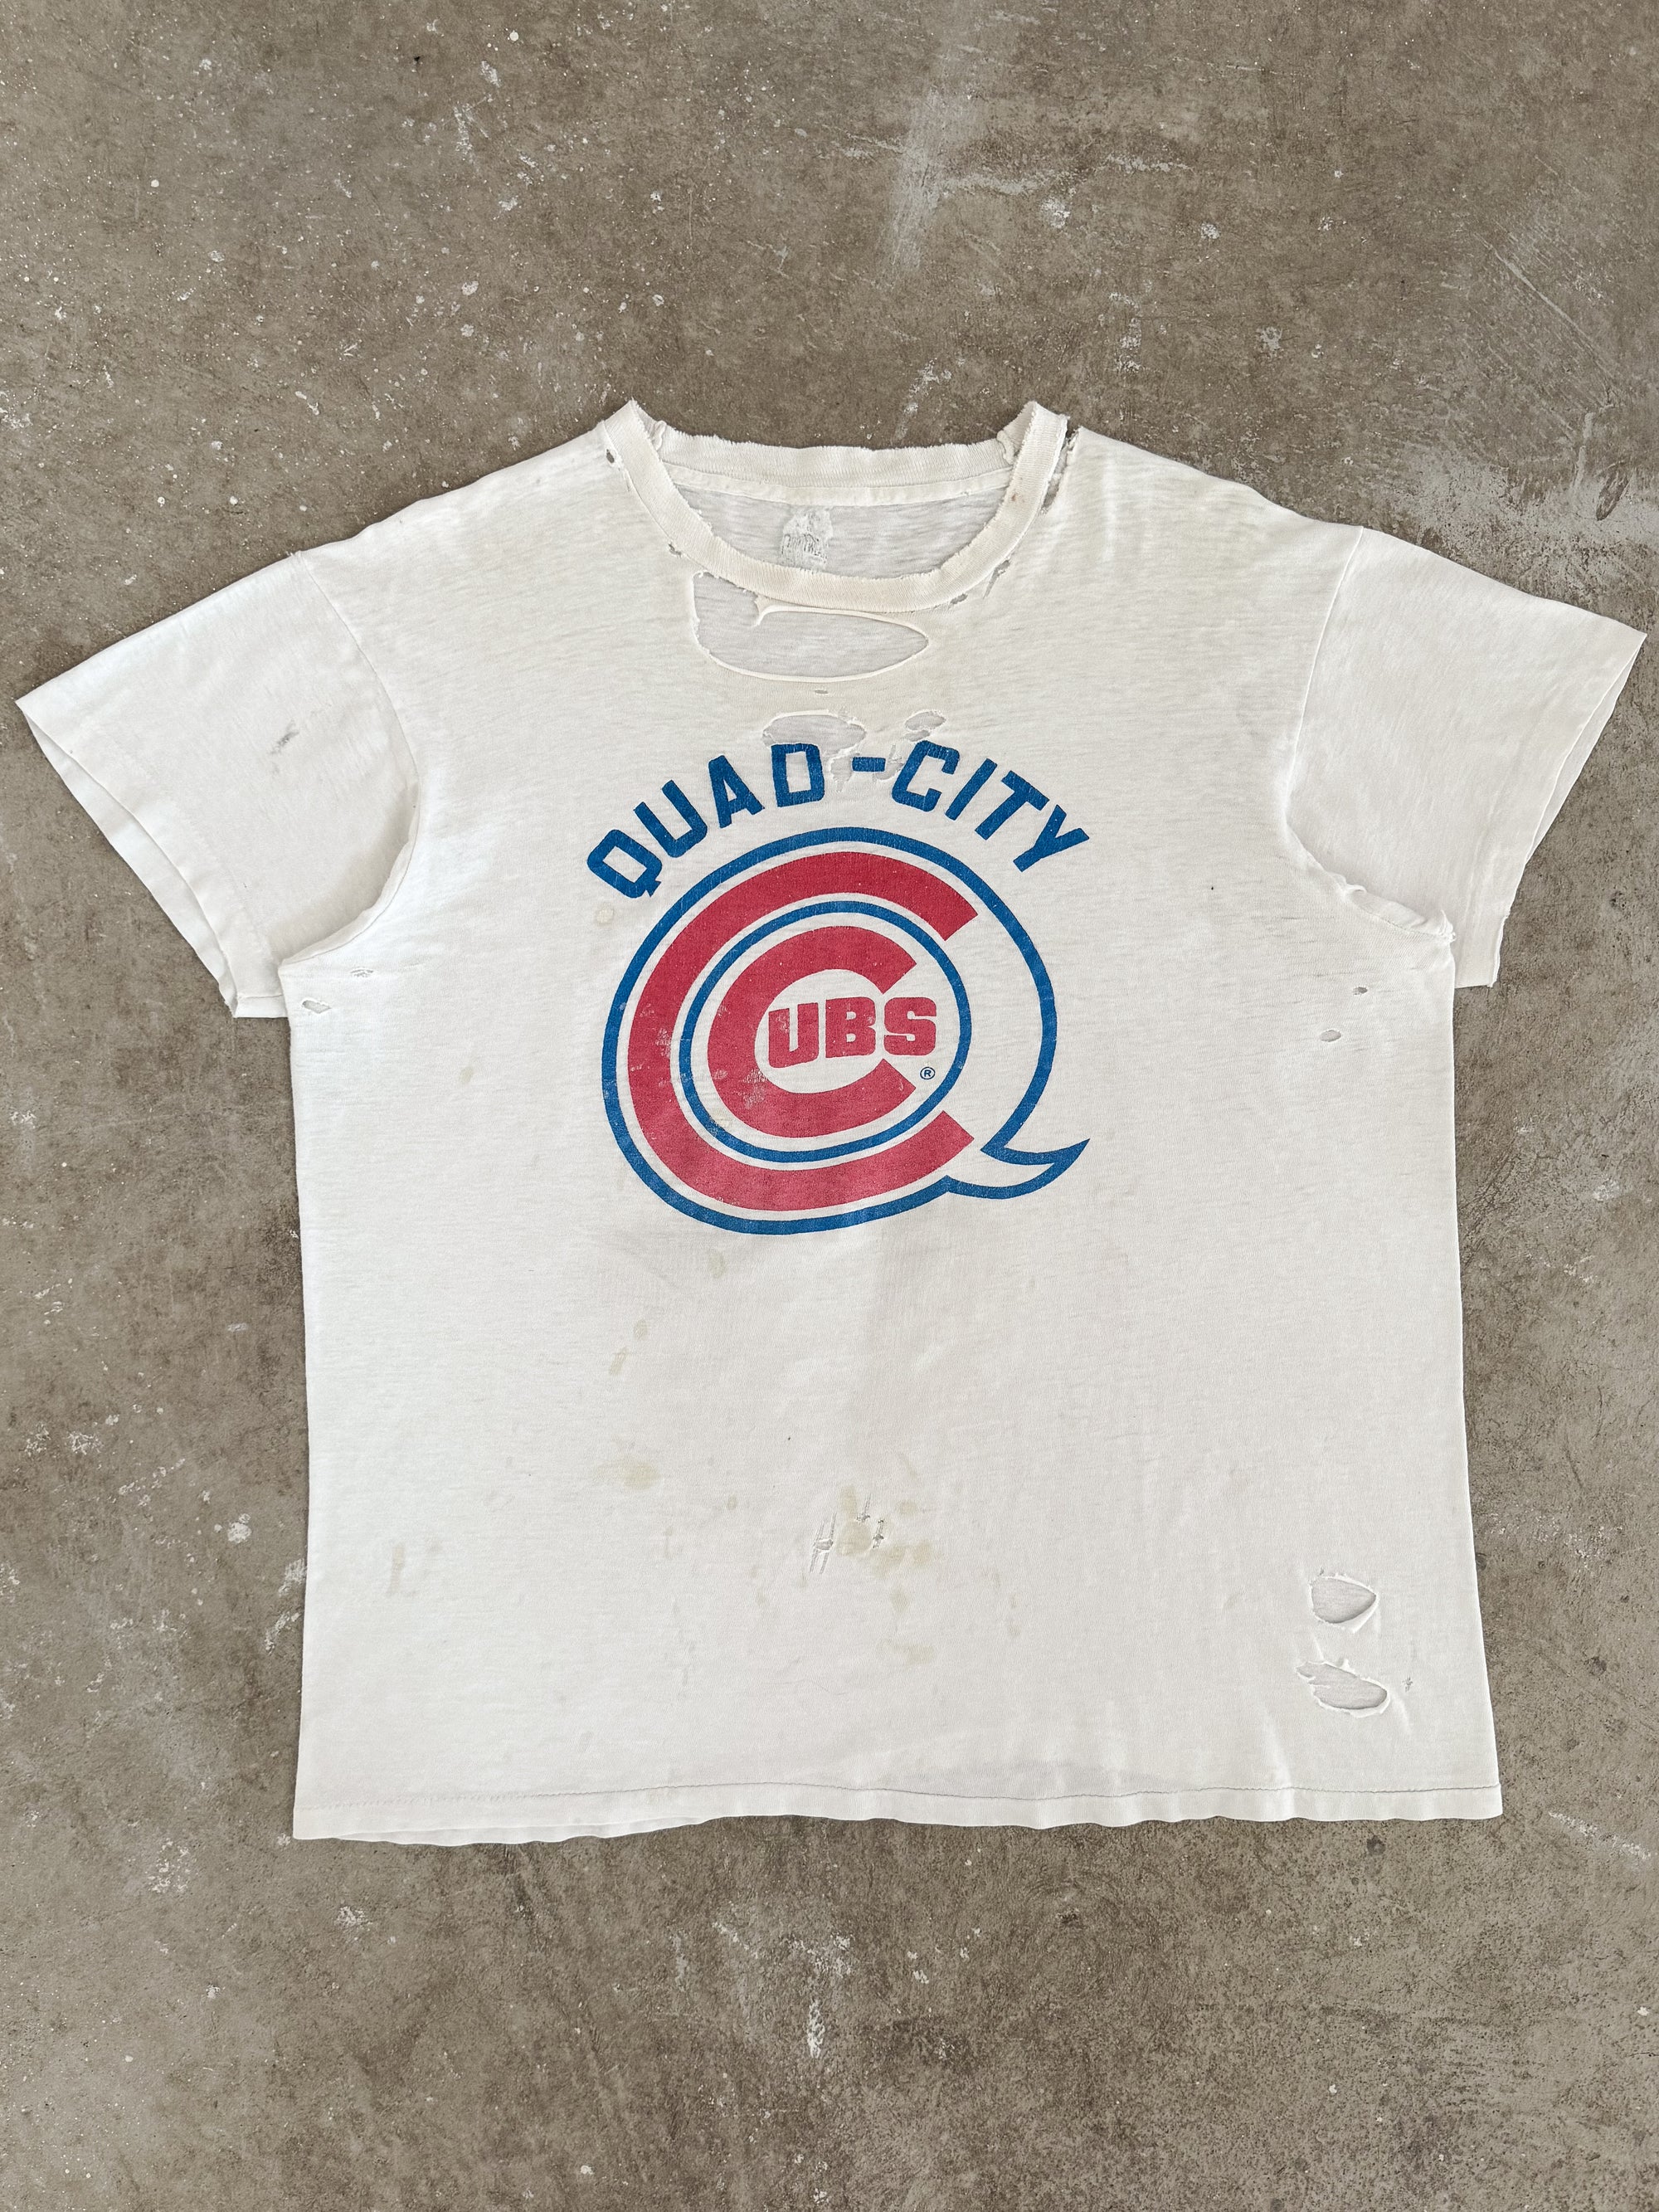 1970s "Quad-City Cubs" Thrashed Tee (M)